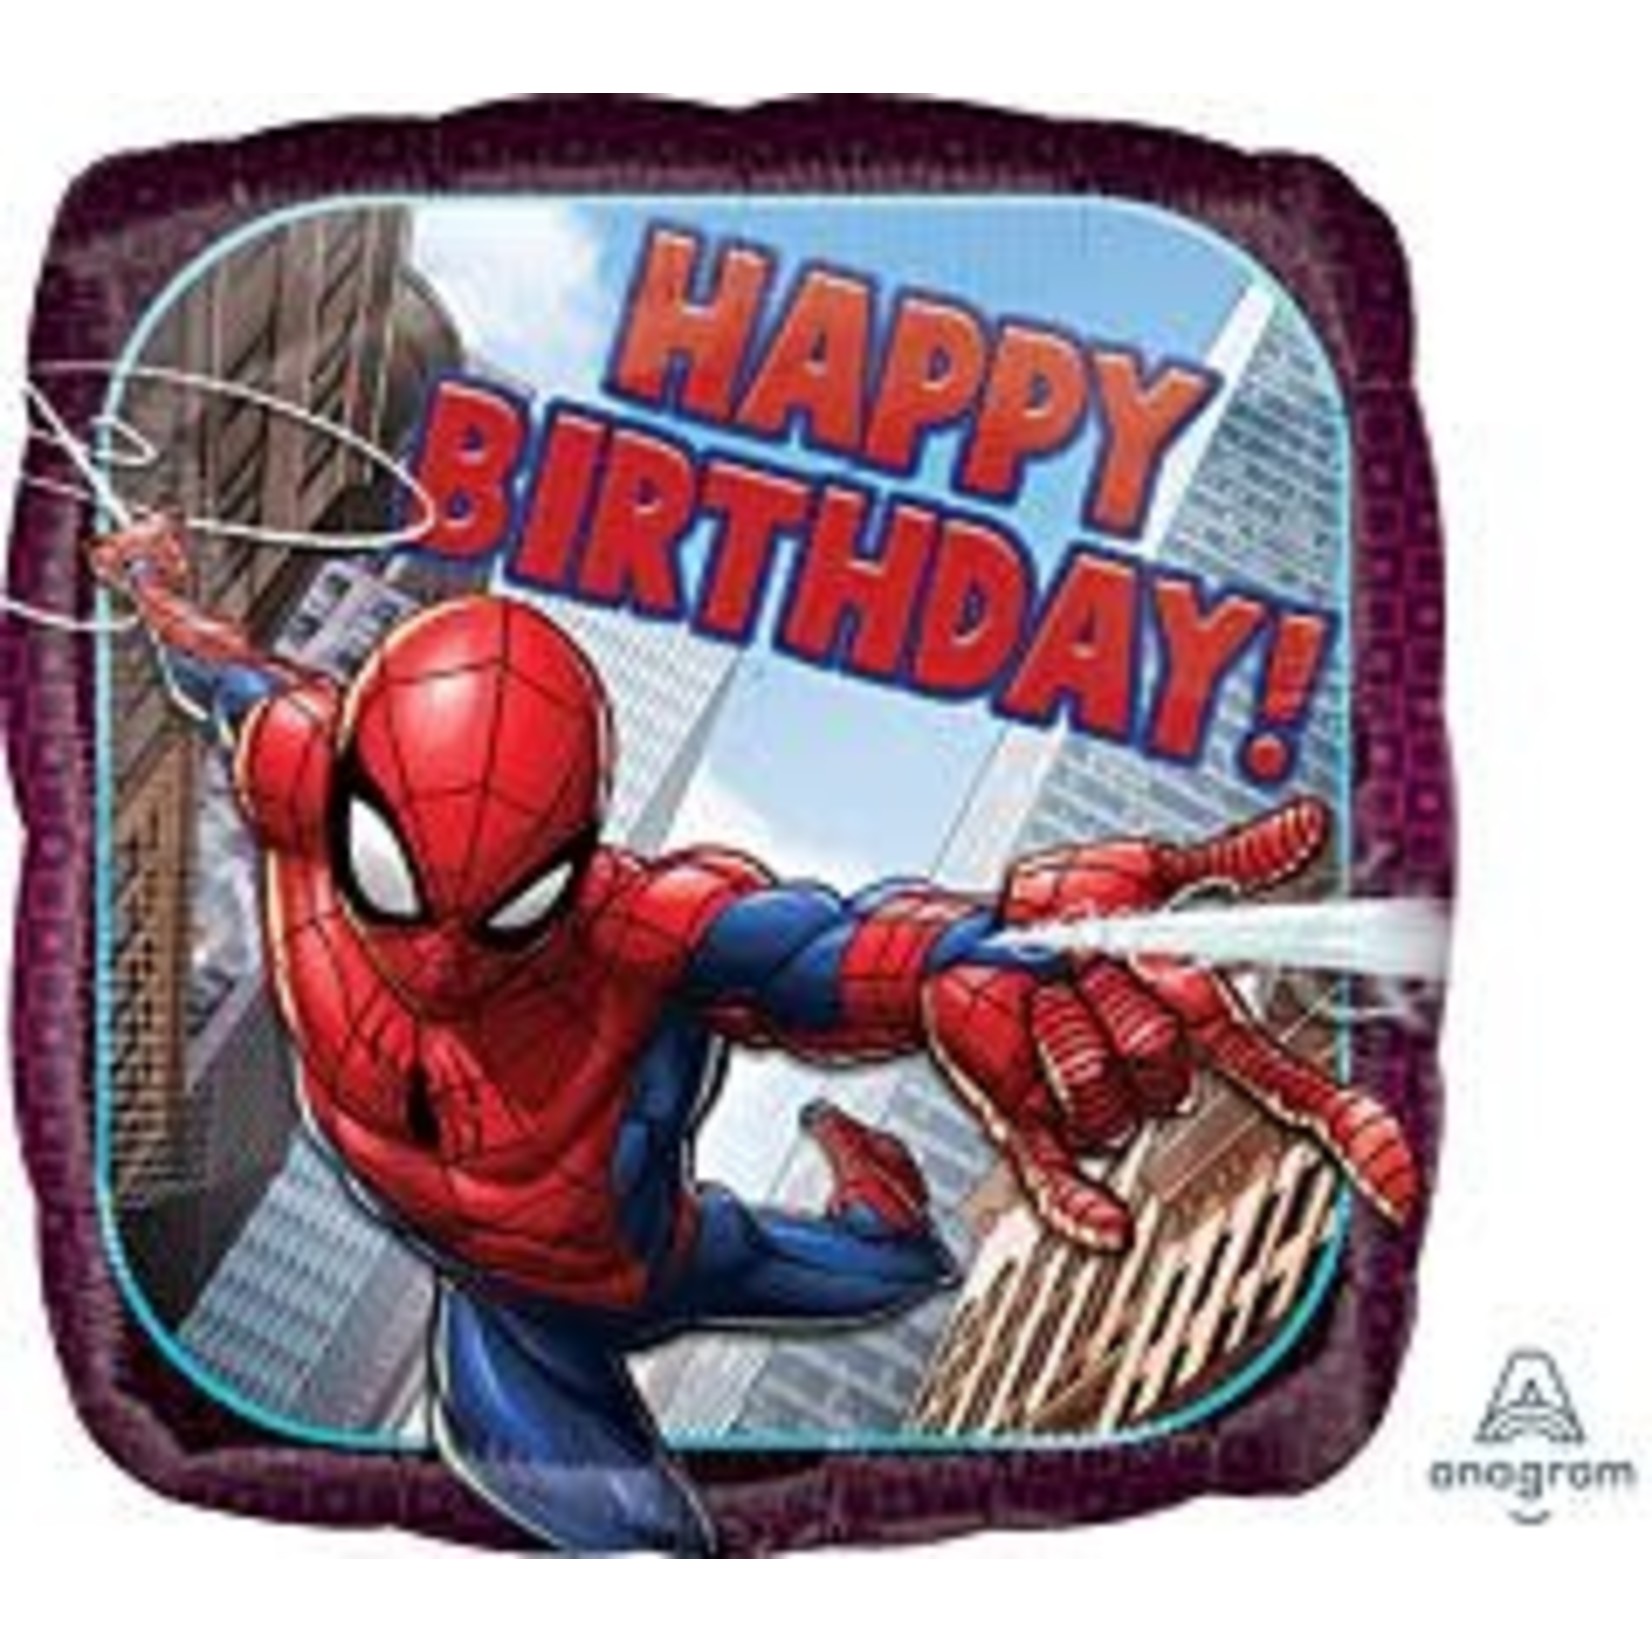 Anagram 18" Happy Bday Spiderman Balloon